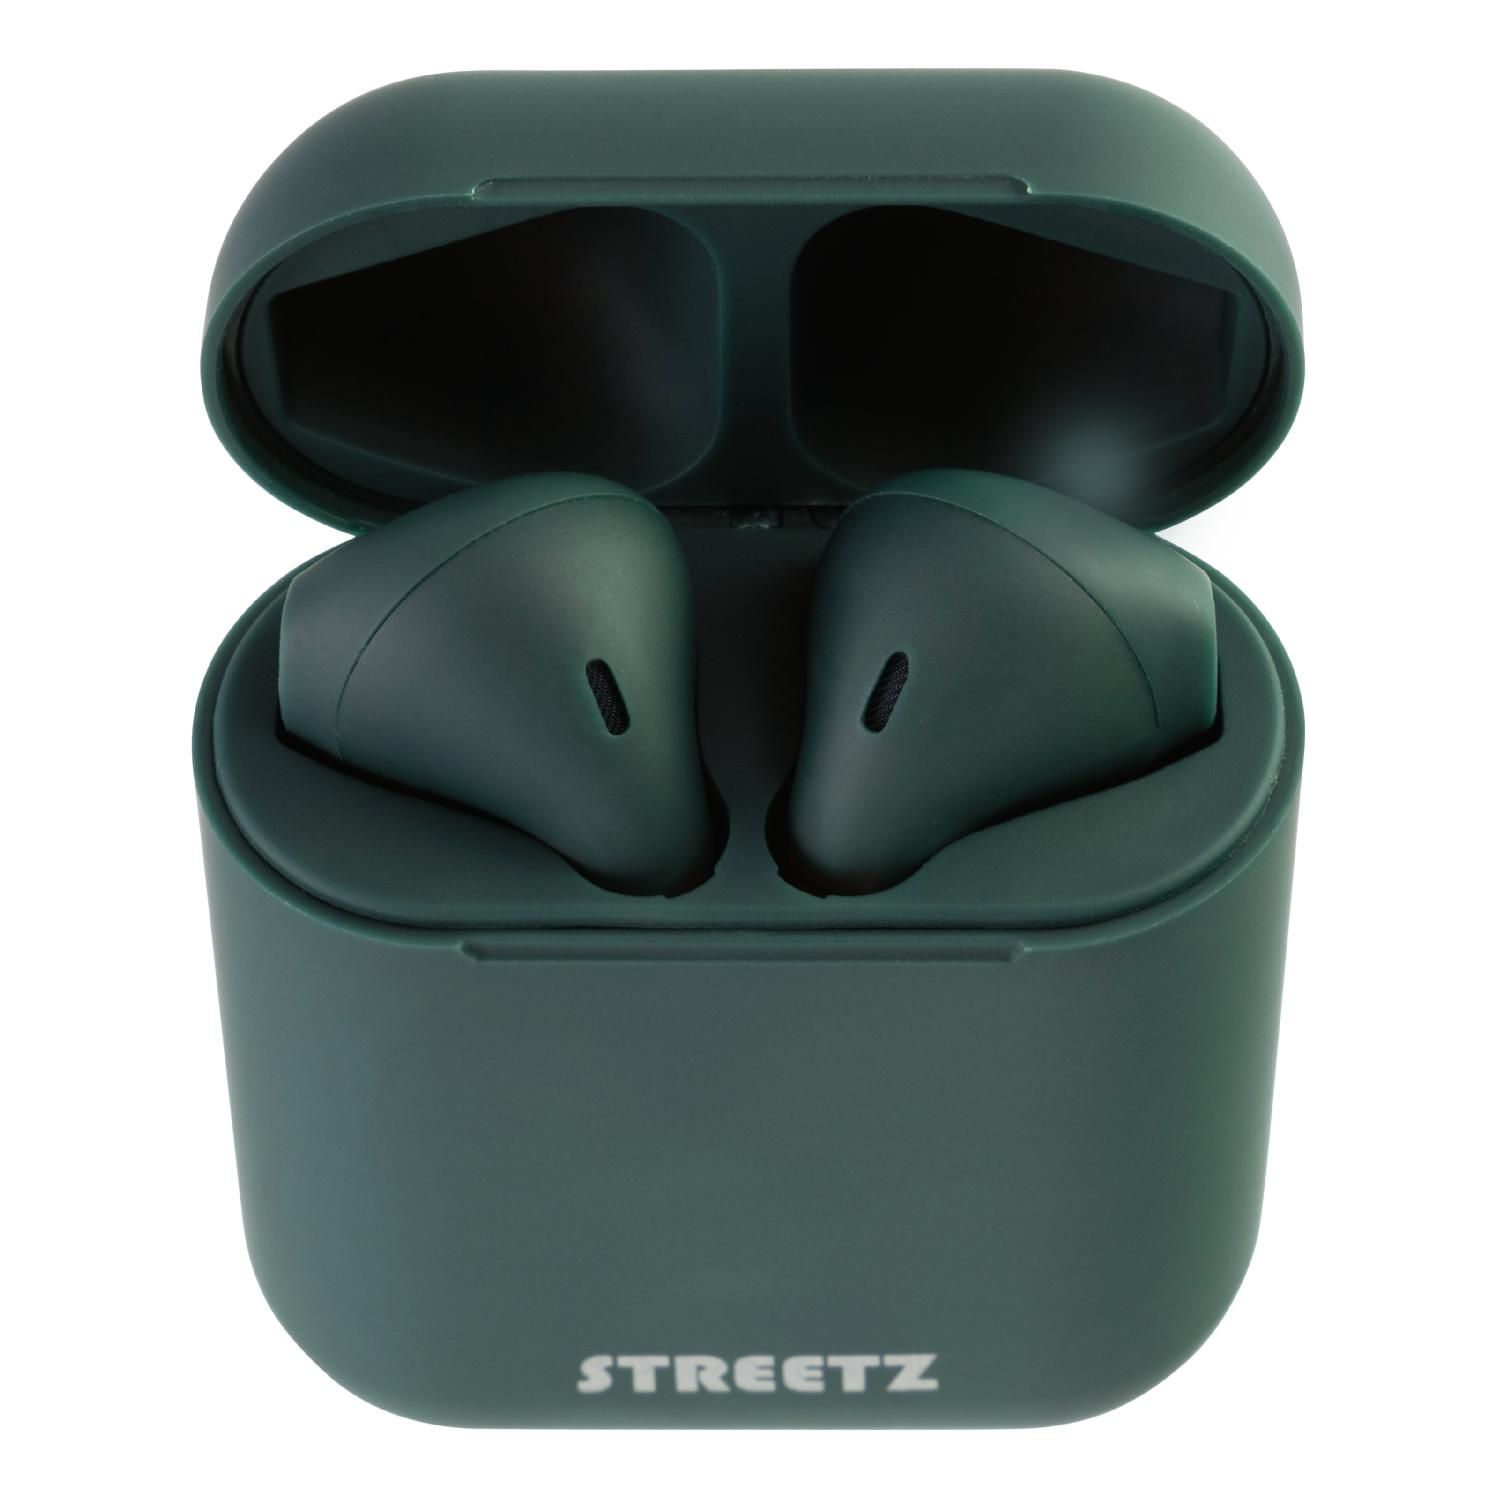 STREETZ TWS Bluetooth In-Ear Kopfhörer, In-ear Kopfhörer grün